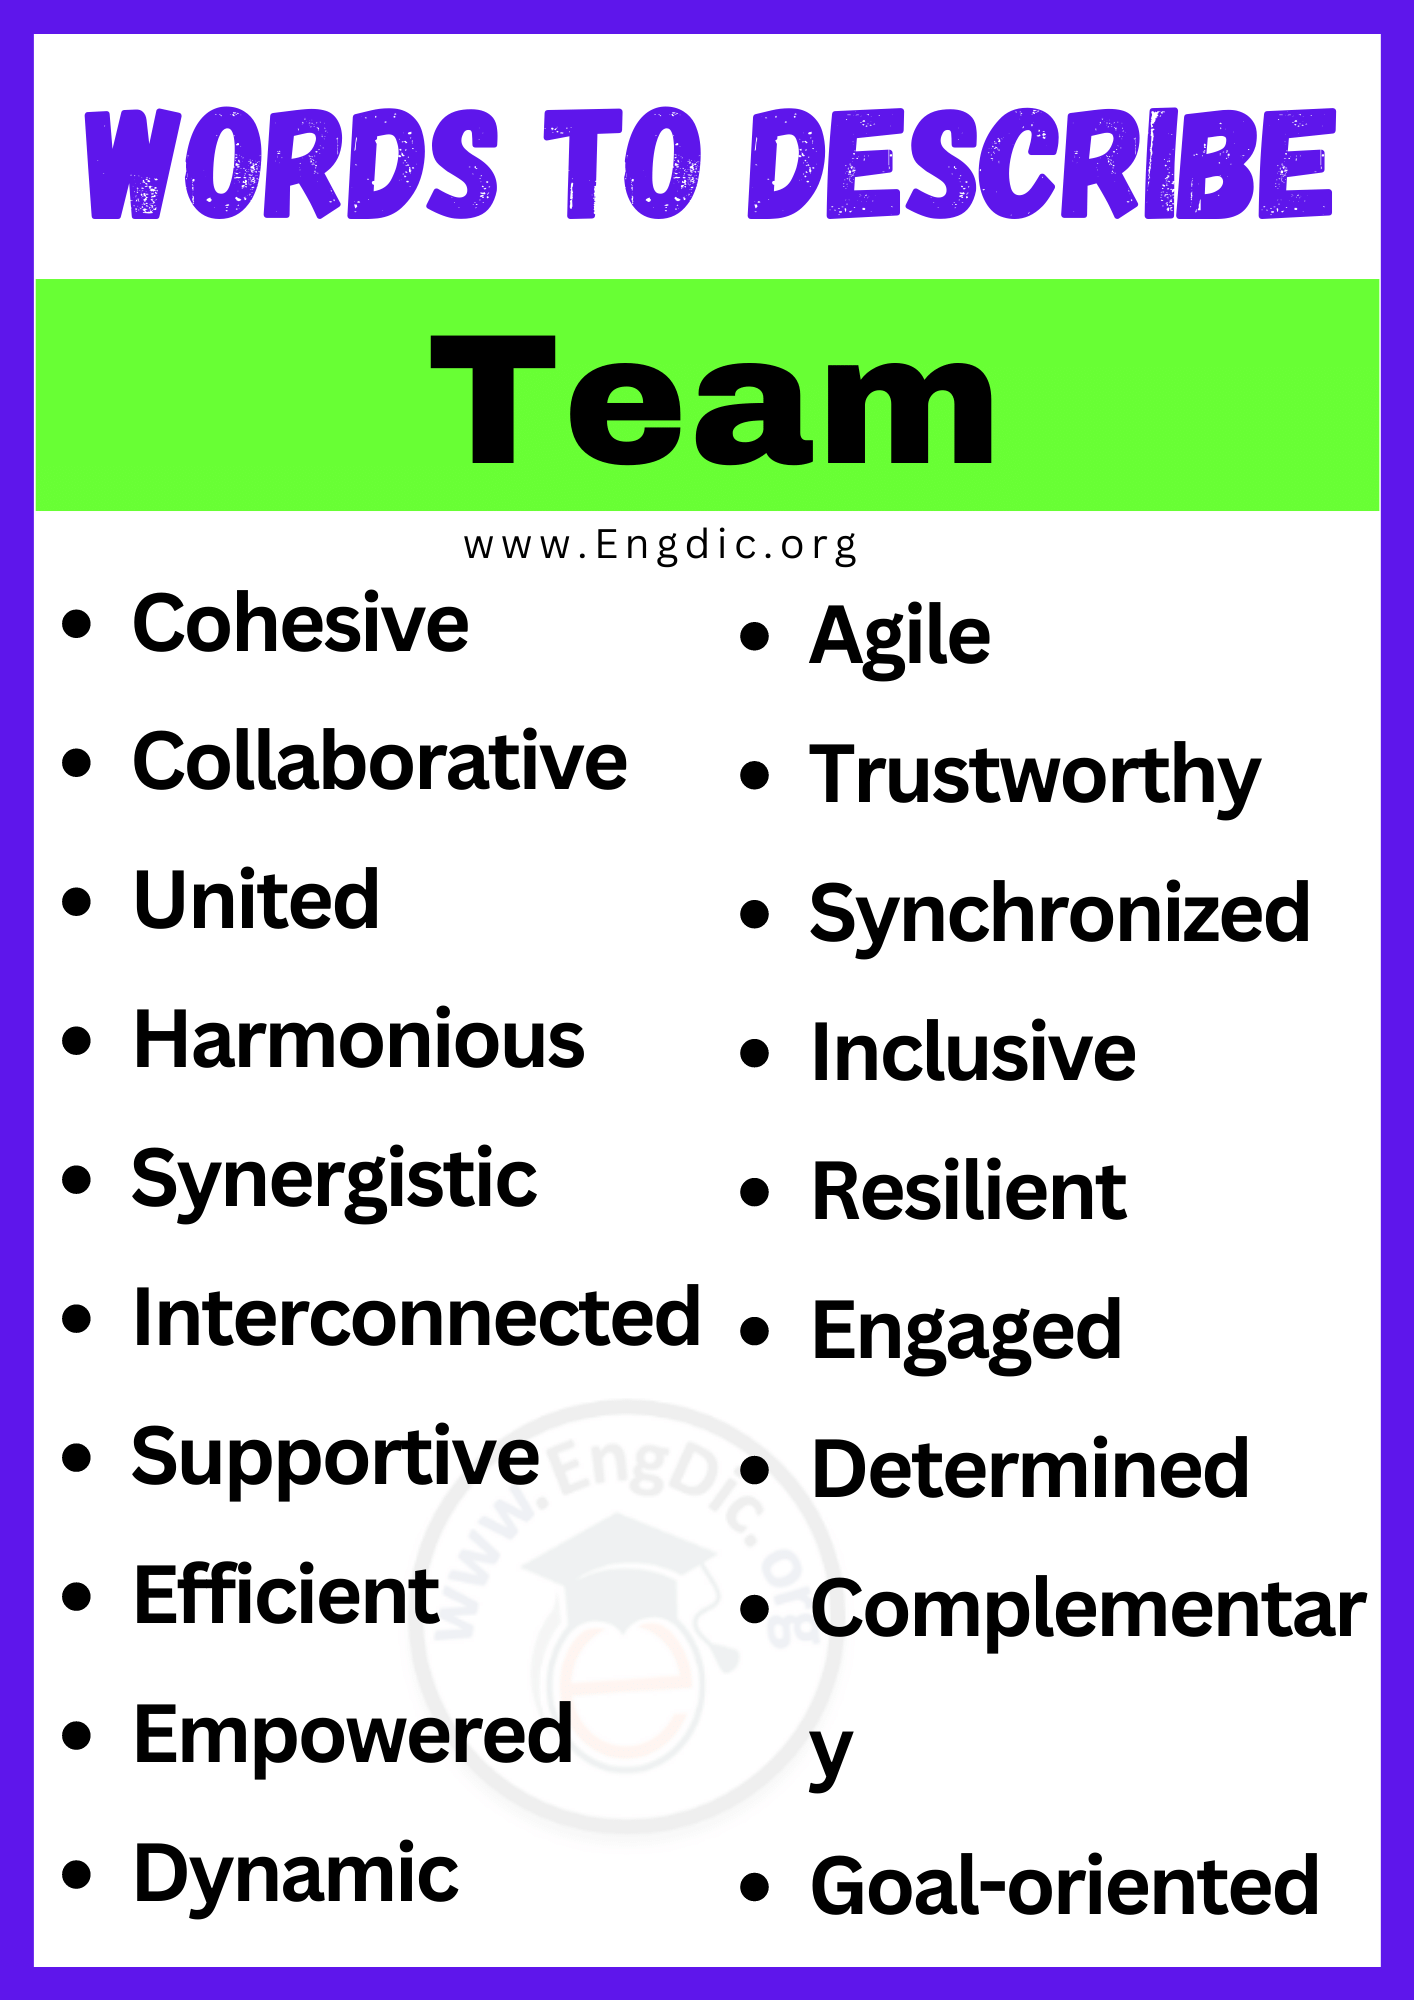 Words to Describe Team